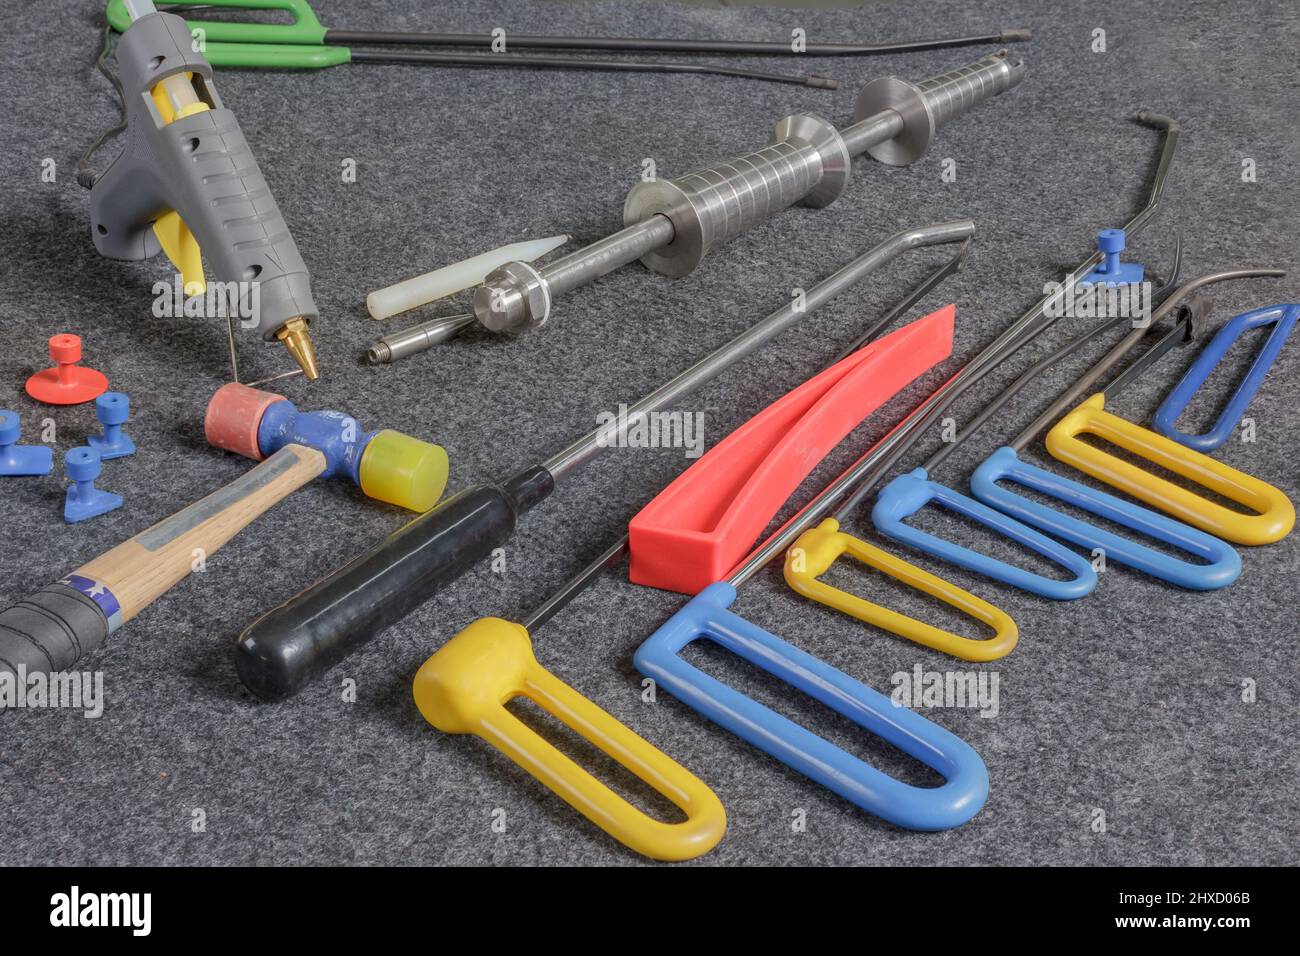 Kit di riparazione ammaccature senza verniciatura, set di attrezzi